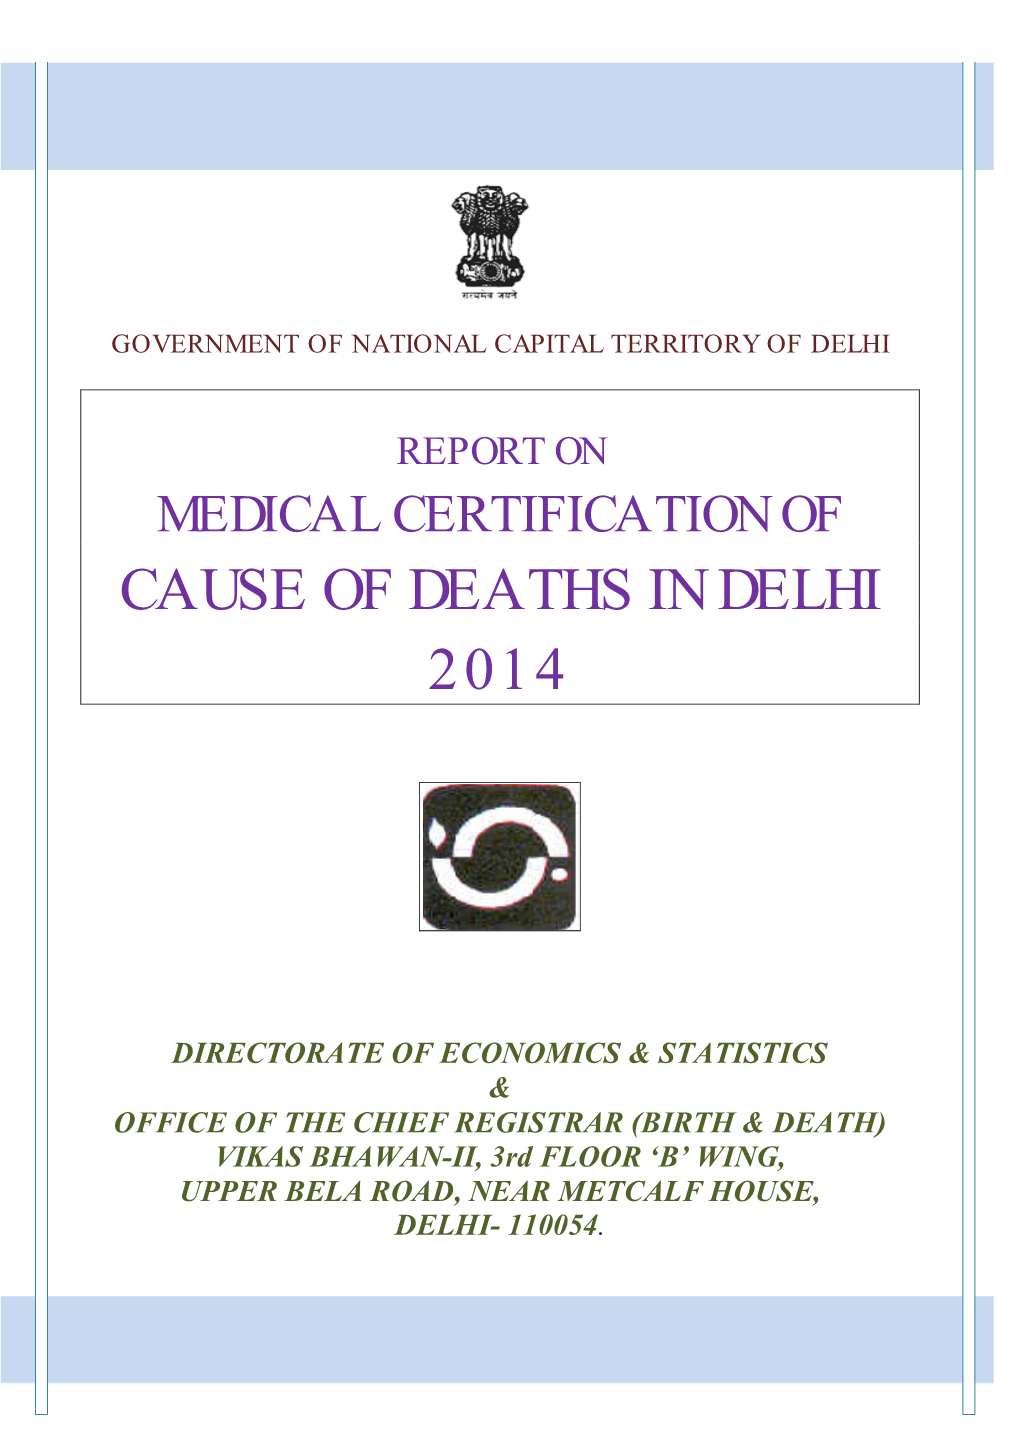 Cause of Deaths in Delhi 2014